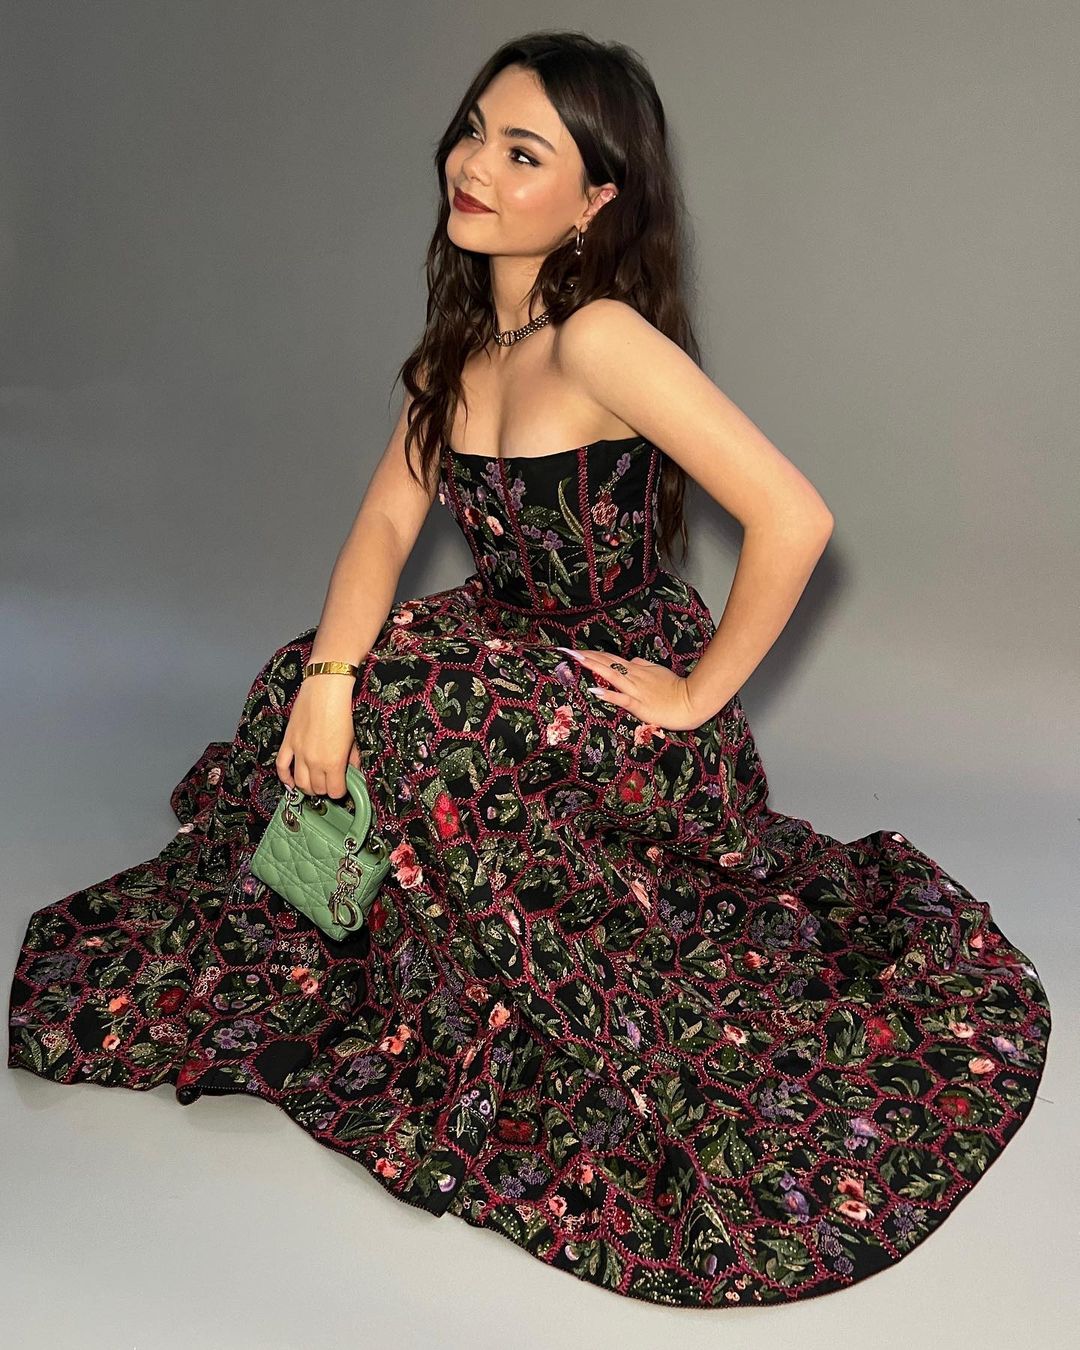 Ariana Greenblatt Stuns in Dior Beauty Photoshoot